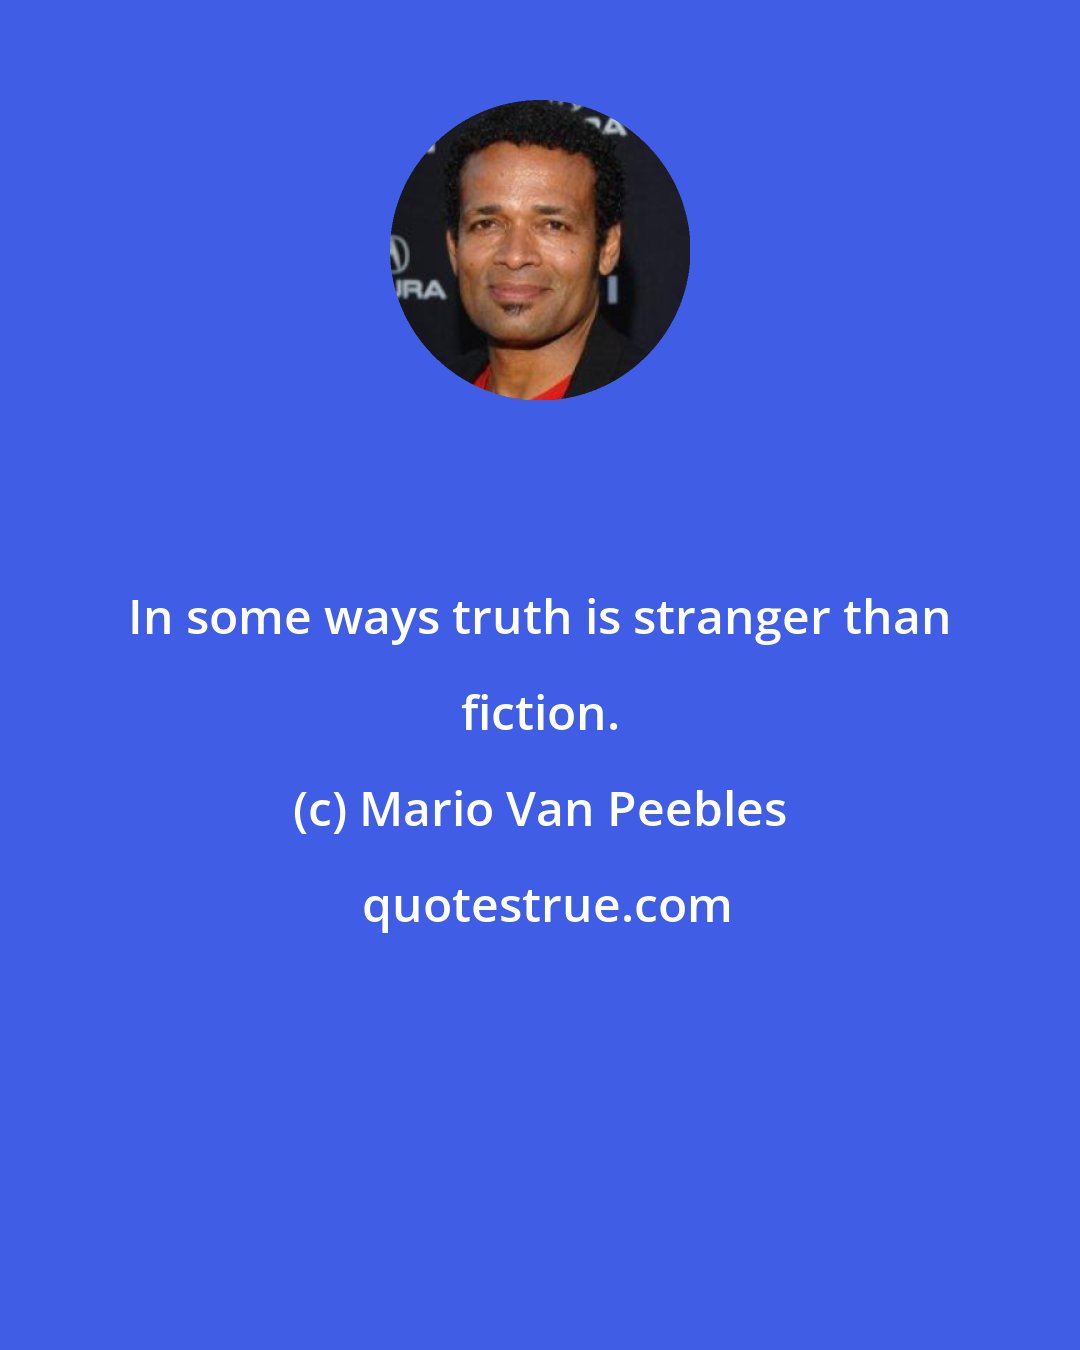 Mario Van Peebles: In some ways truth is stranger than fiction.